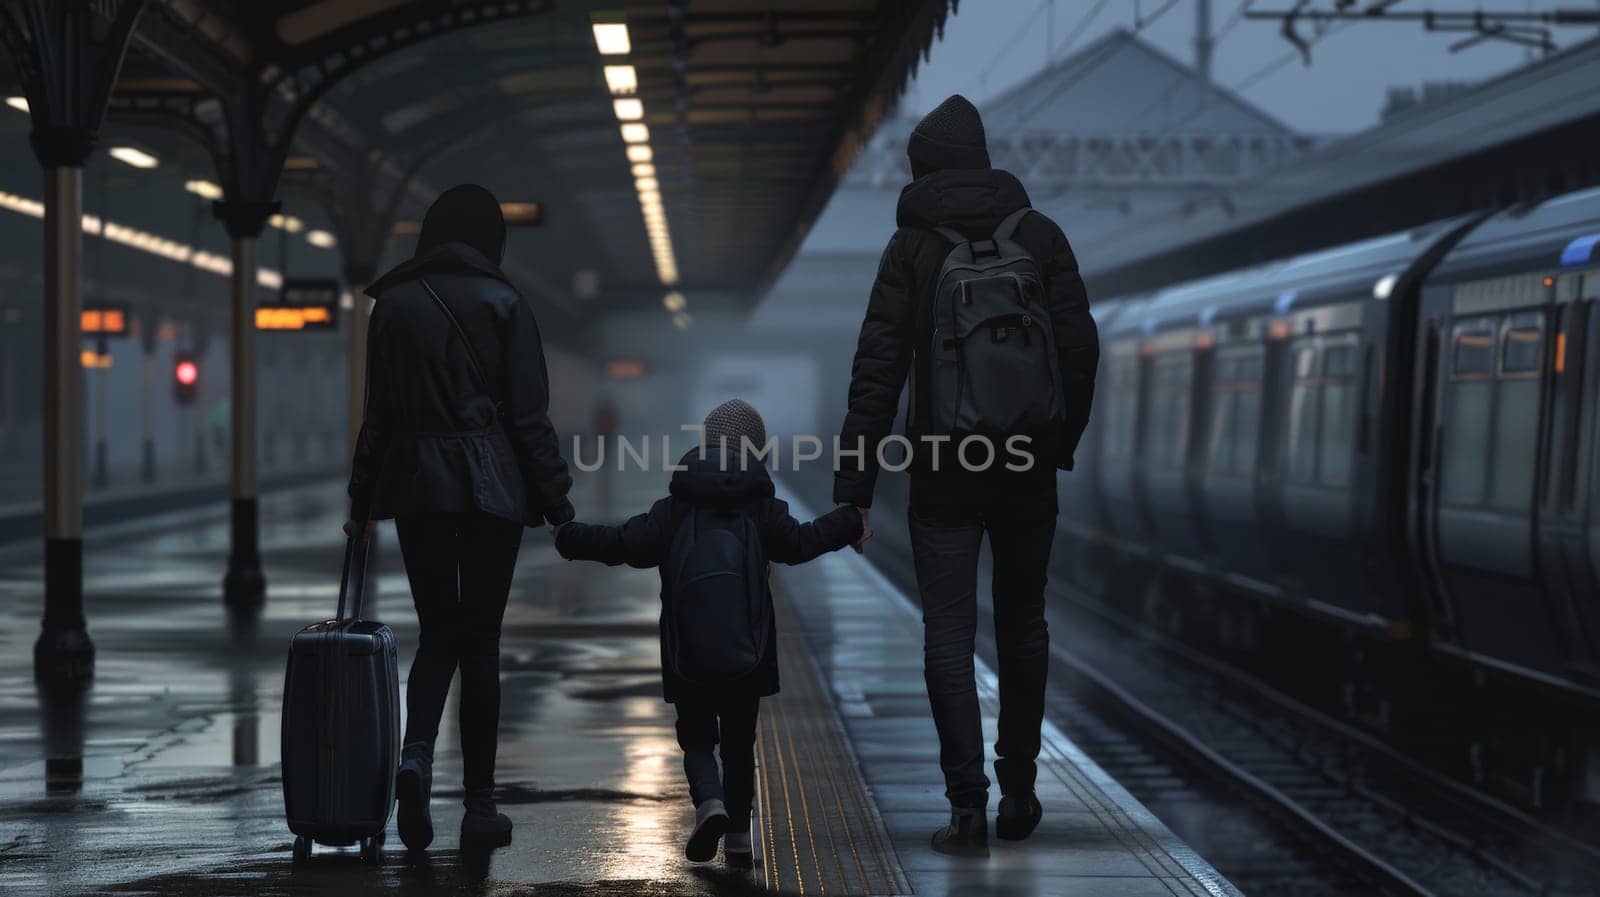 Family on platform of railway train station, Family vacation, Family travel trip by nijieimu